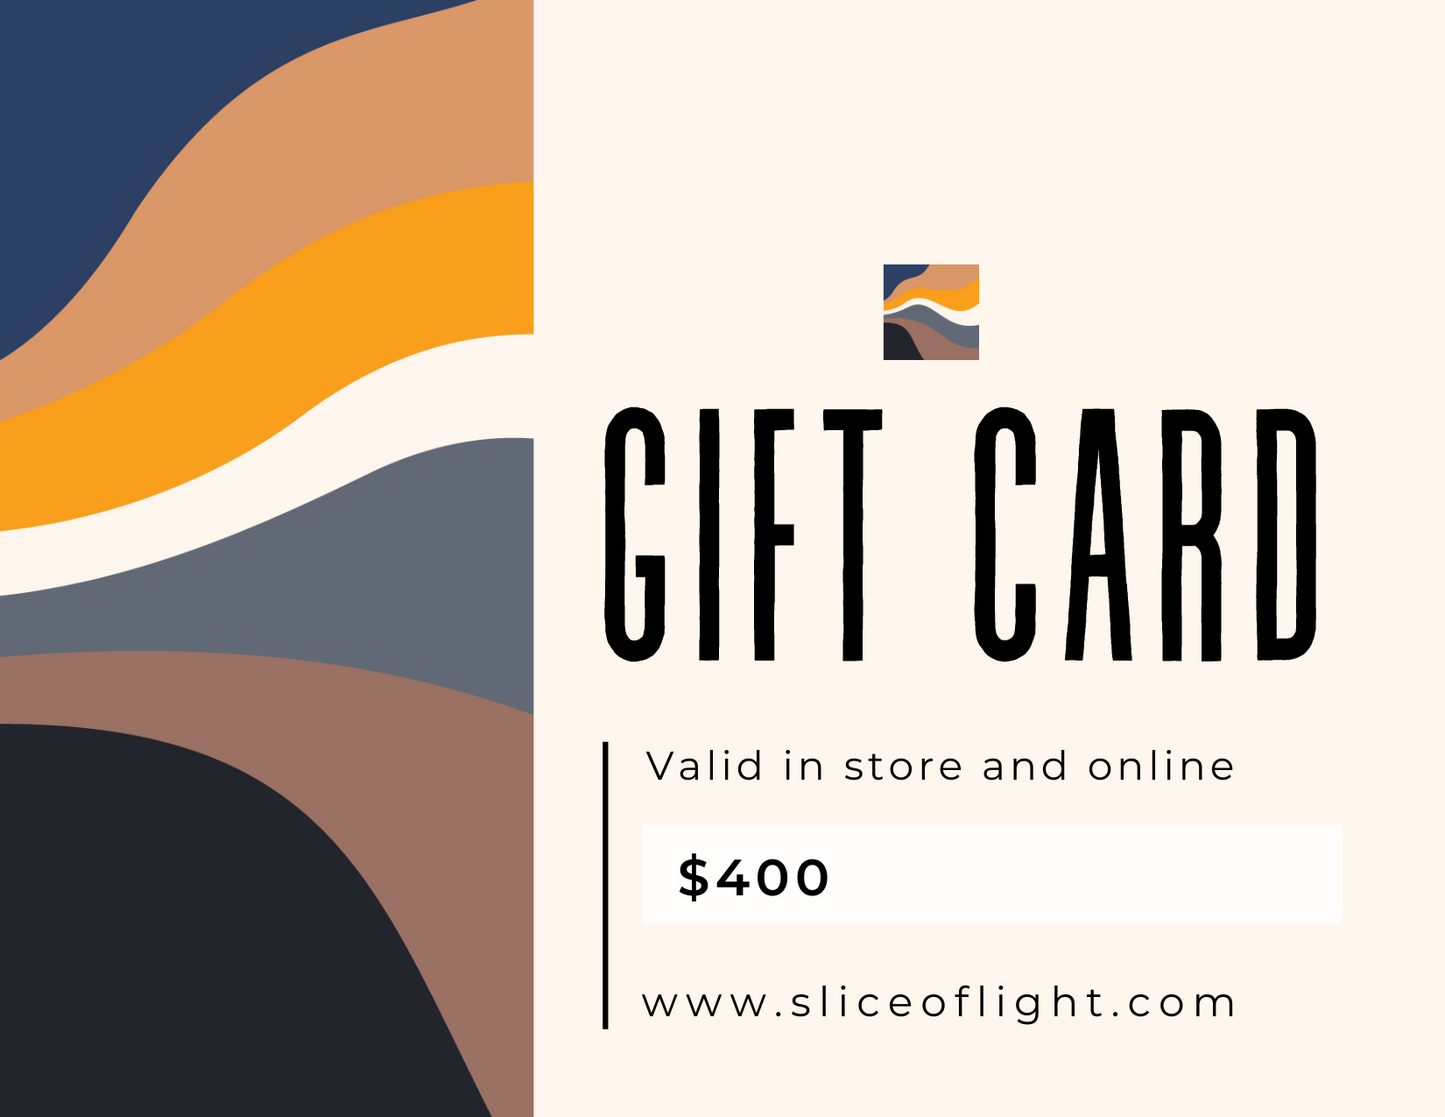 Slice of Light Gallery Gift Card